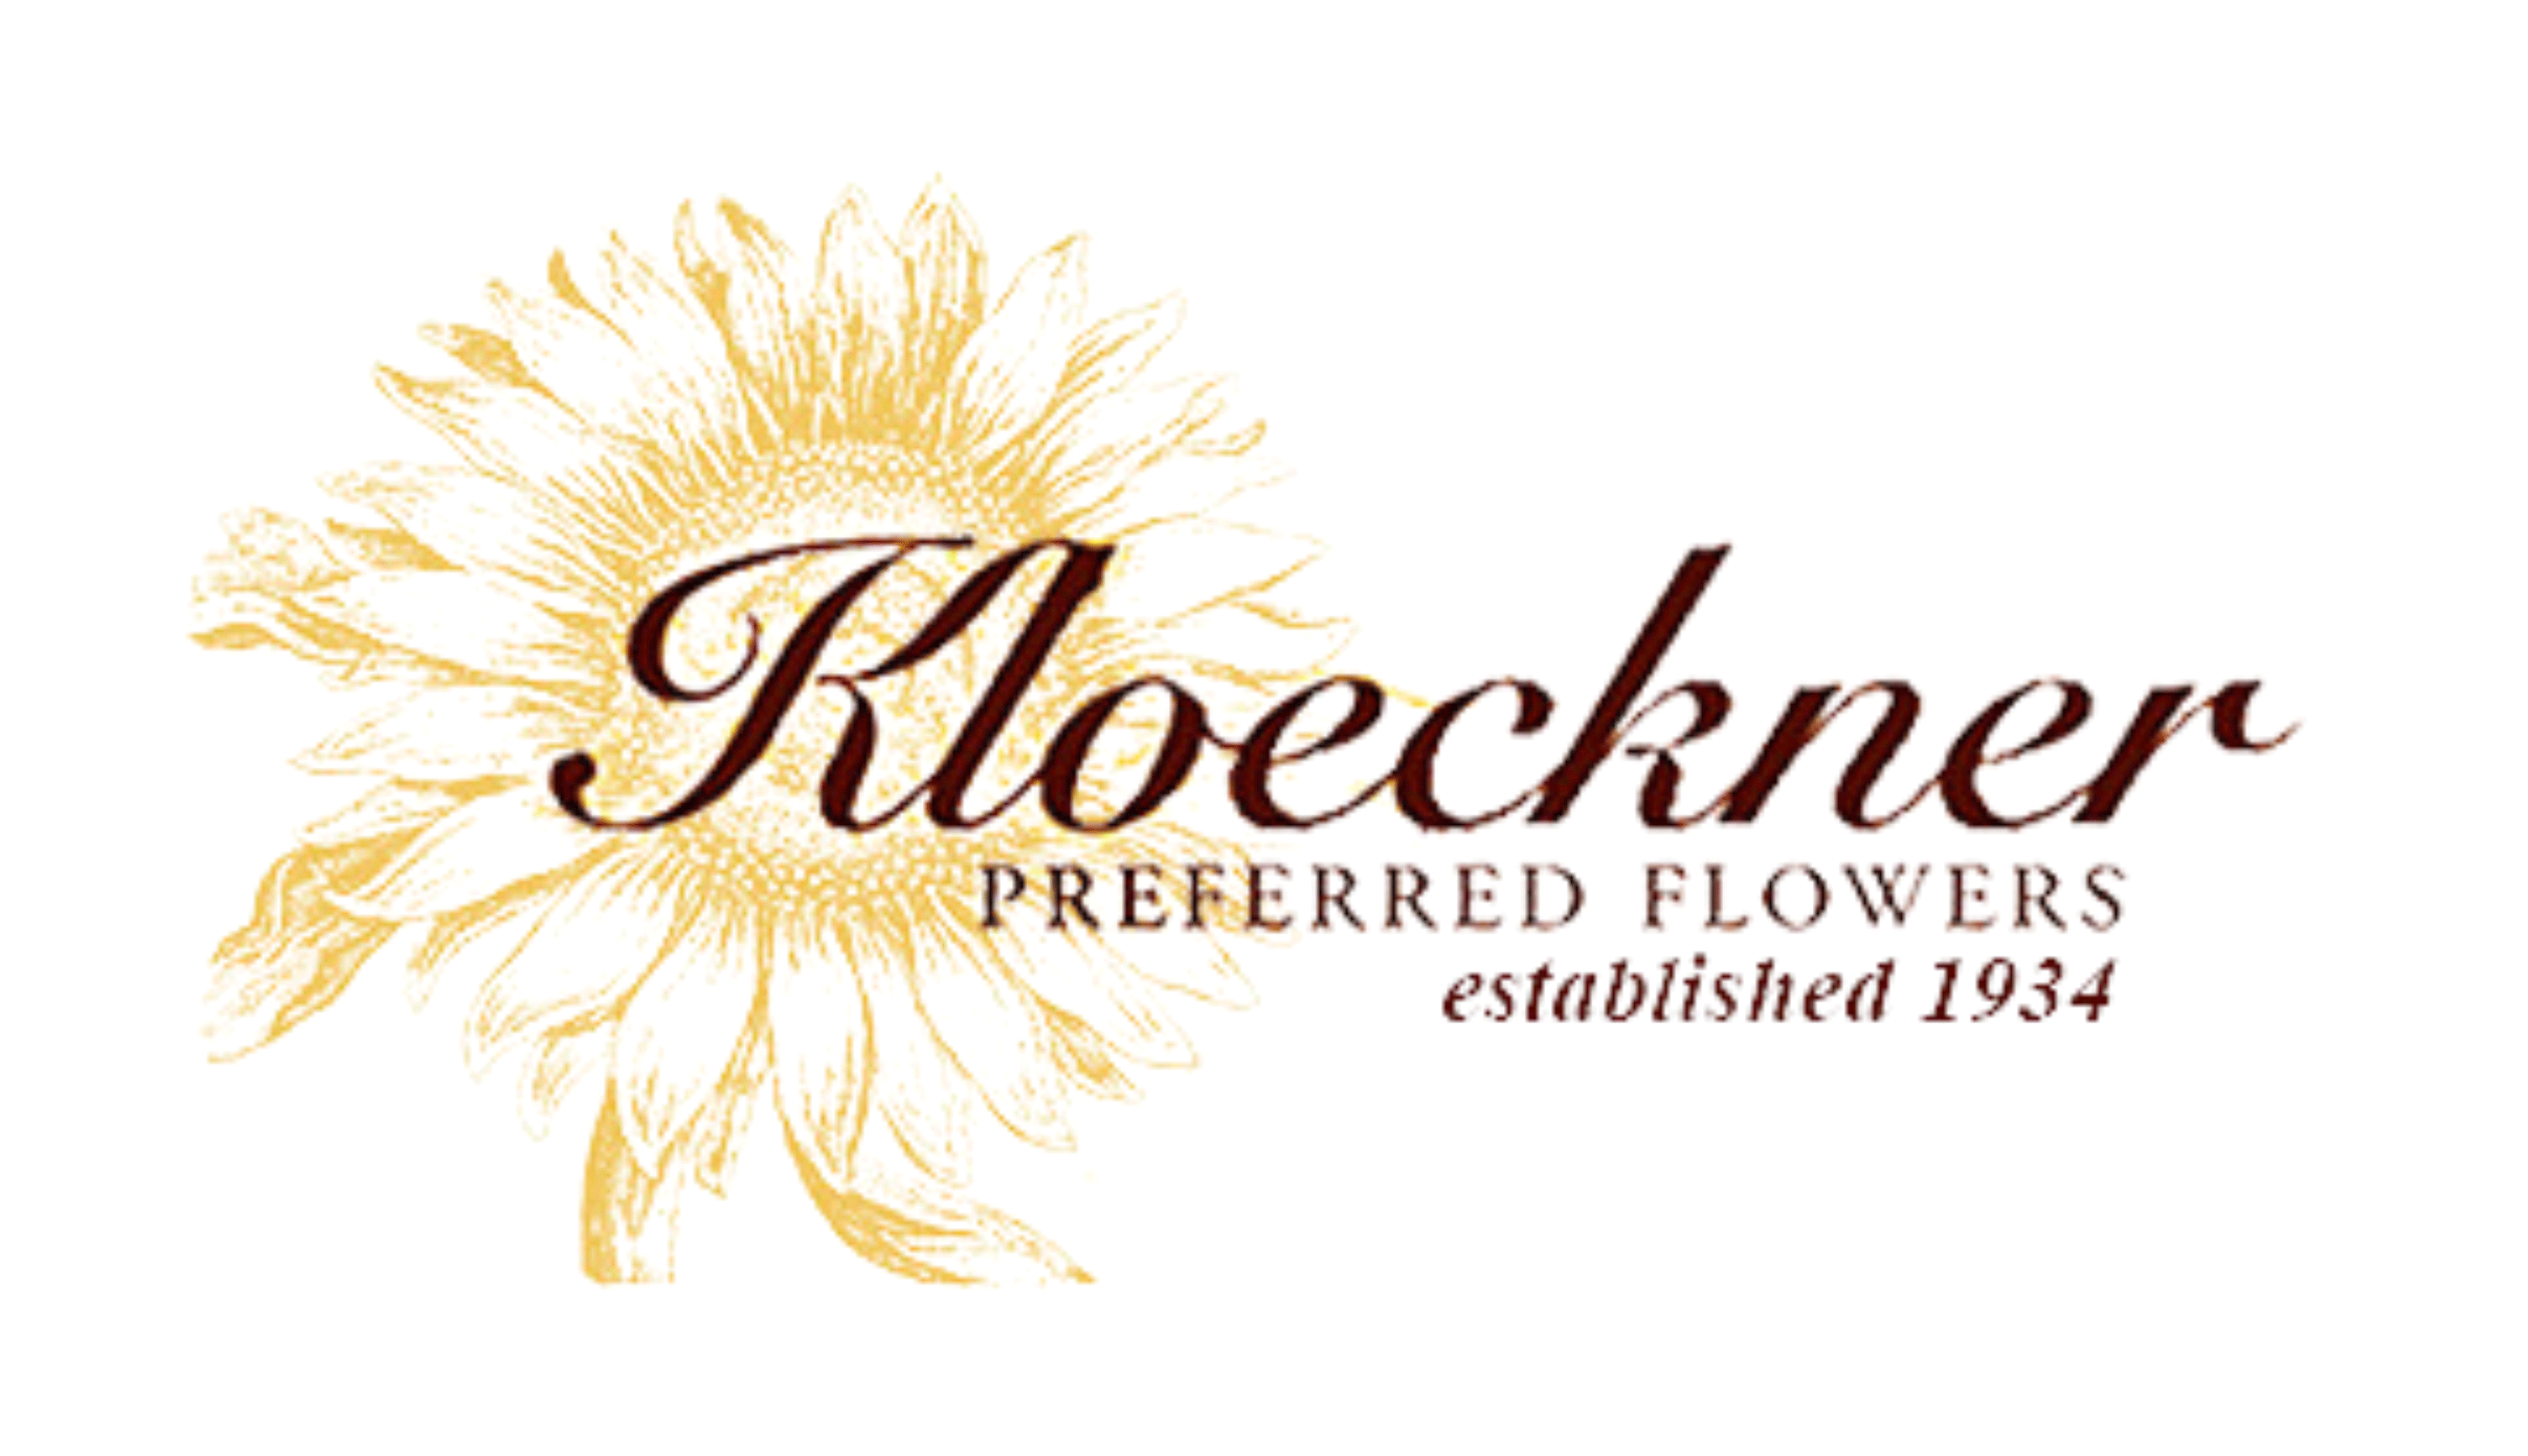 Kloeckner Preferred Flowers